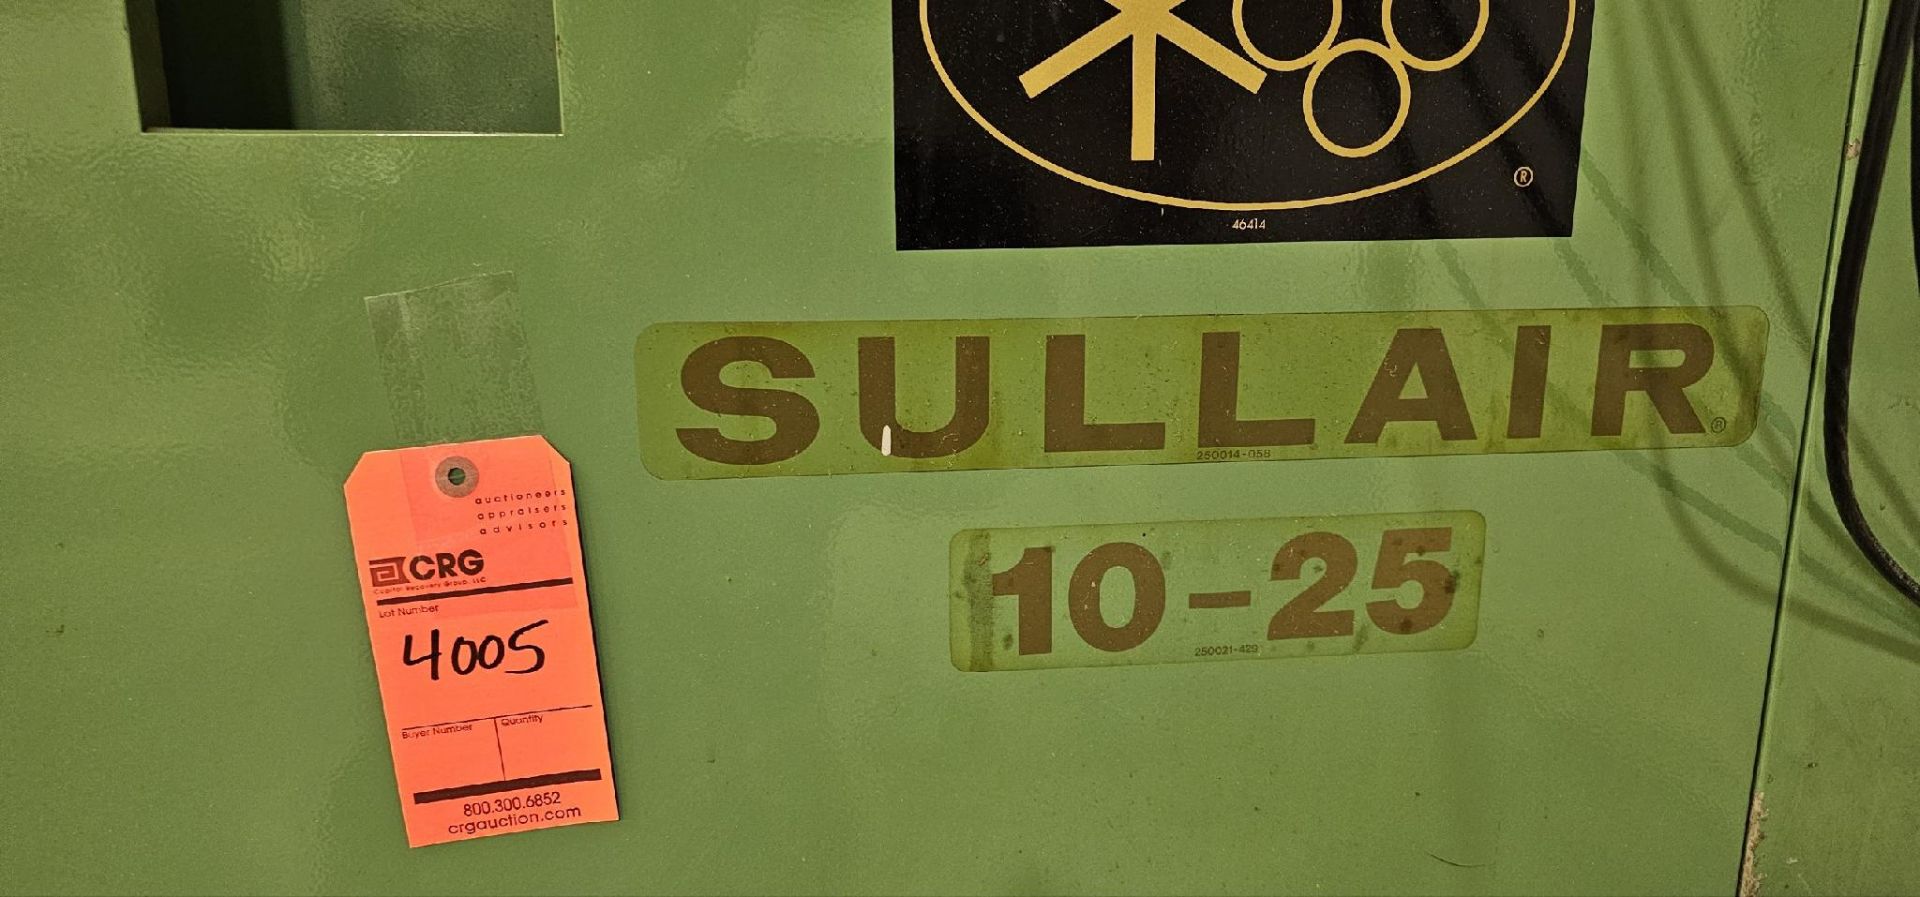 Sullair Air Compressor - Image 3 of 4